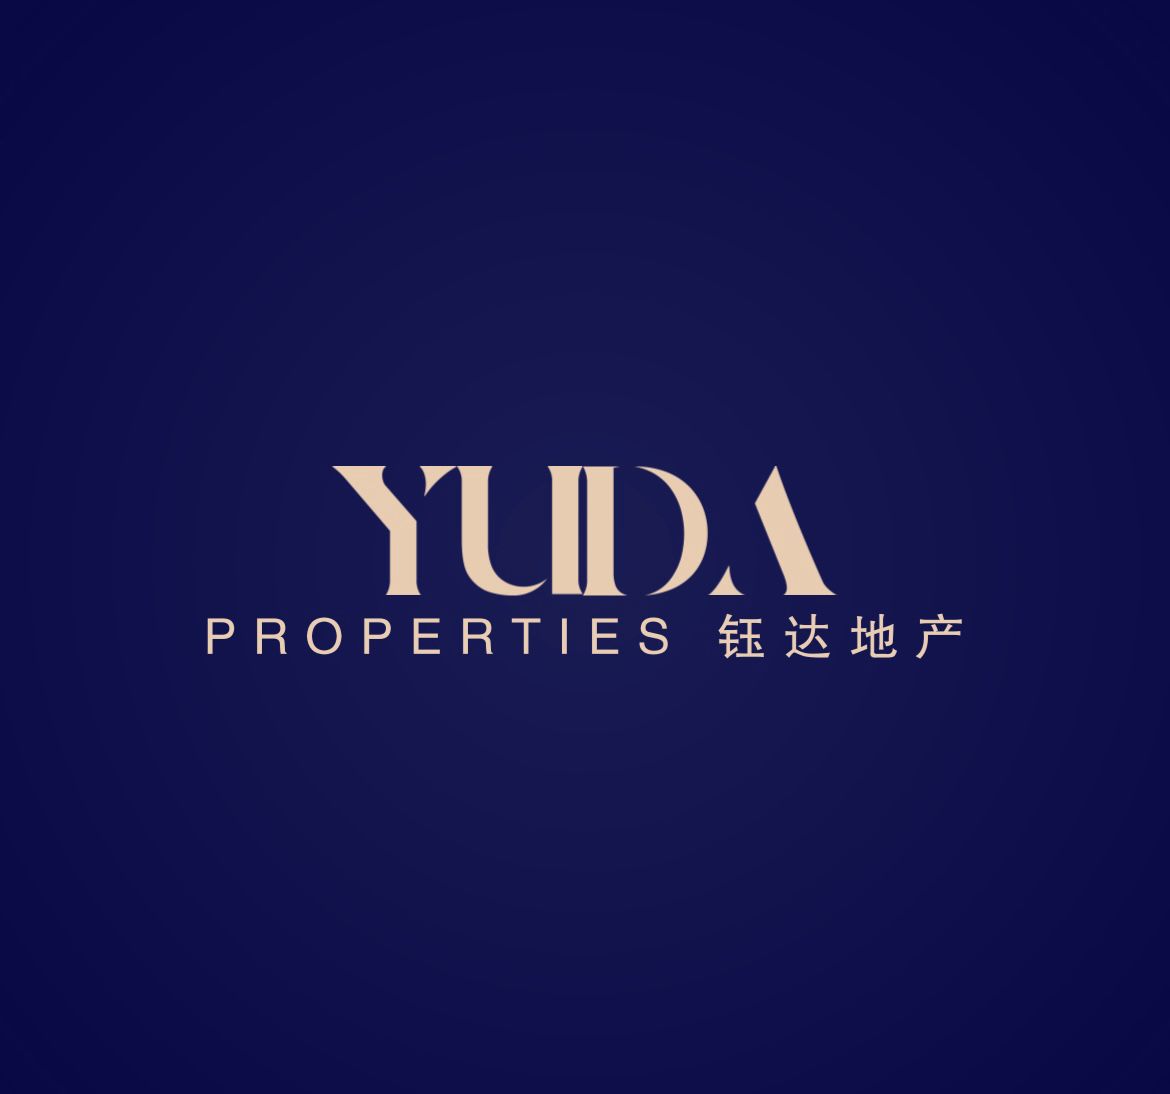 Yuda Properties